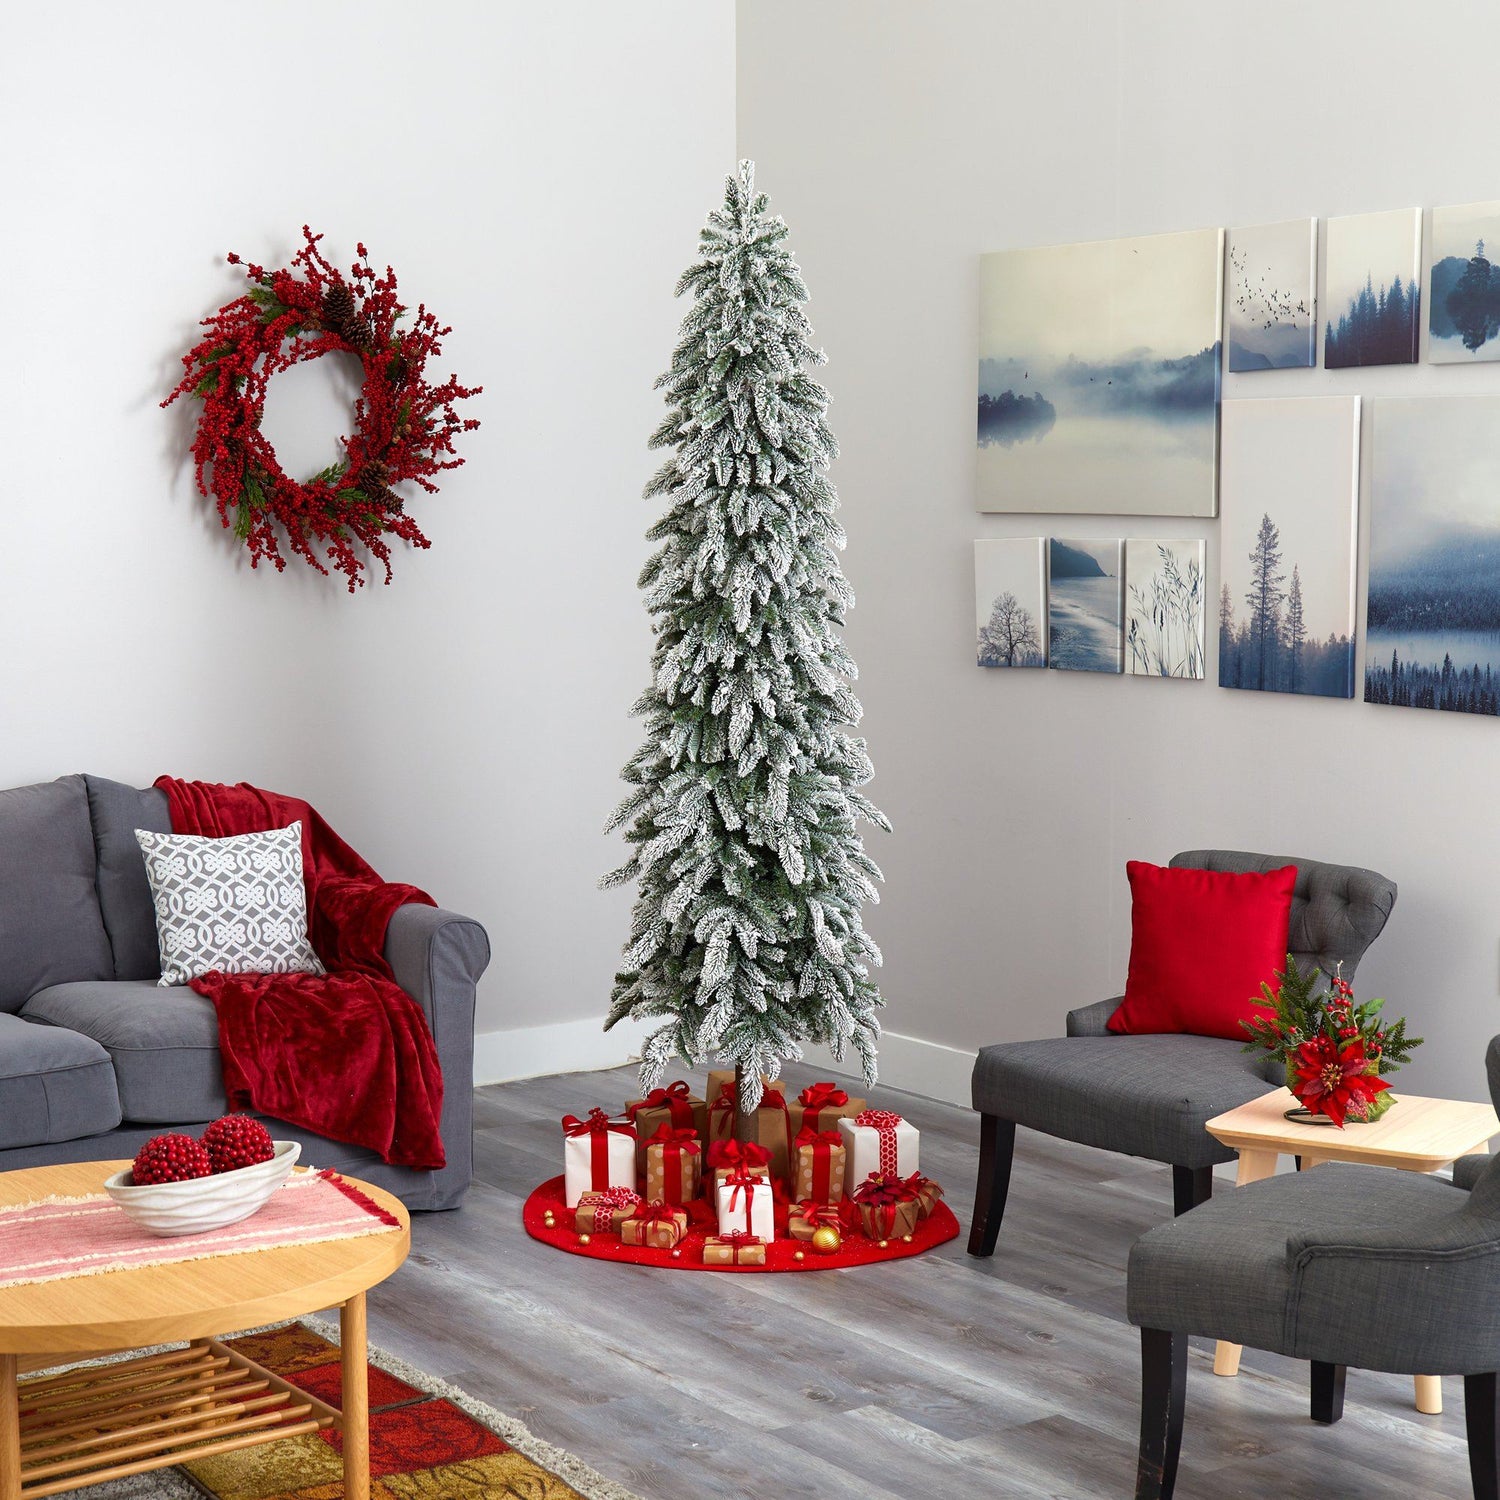 7.5’ Flocked Washington Alpine Artificial Christmas Tree